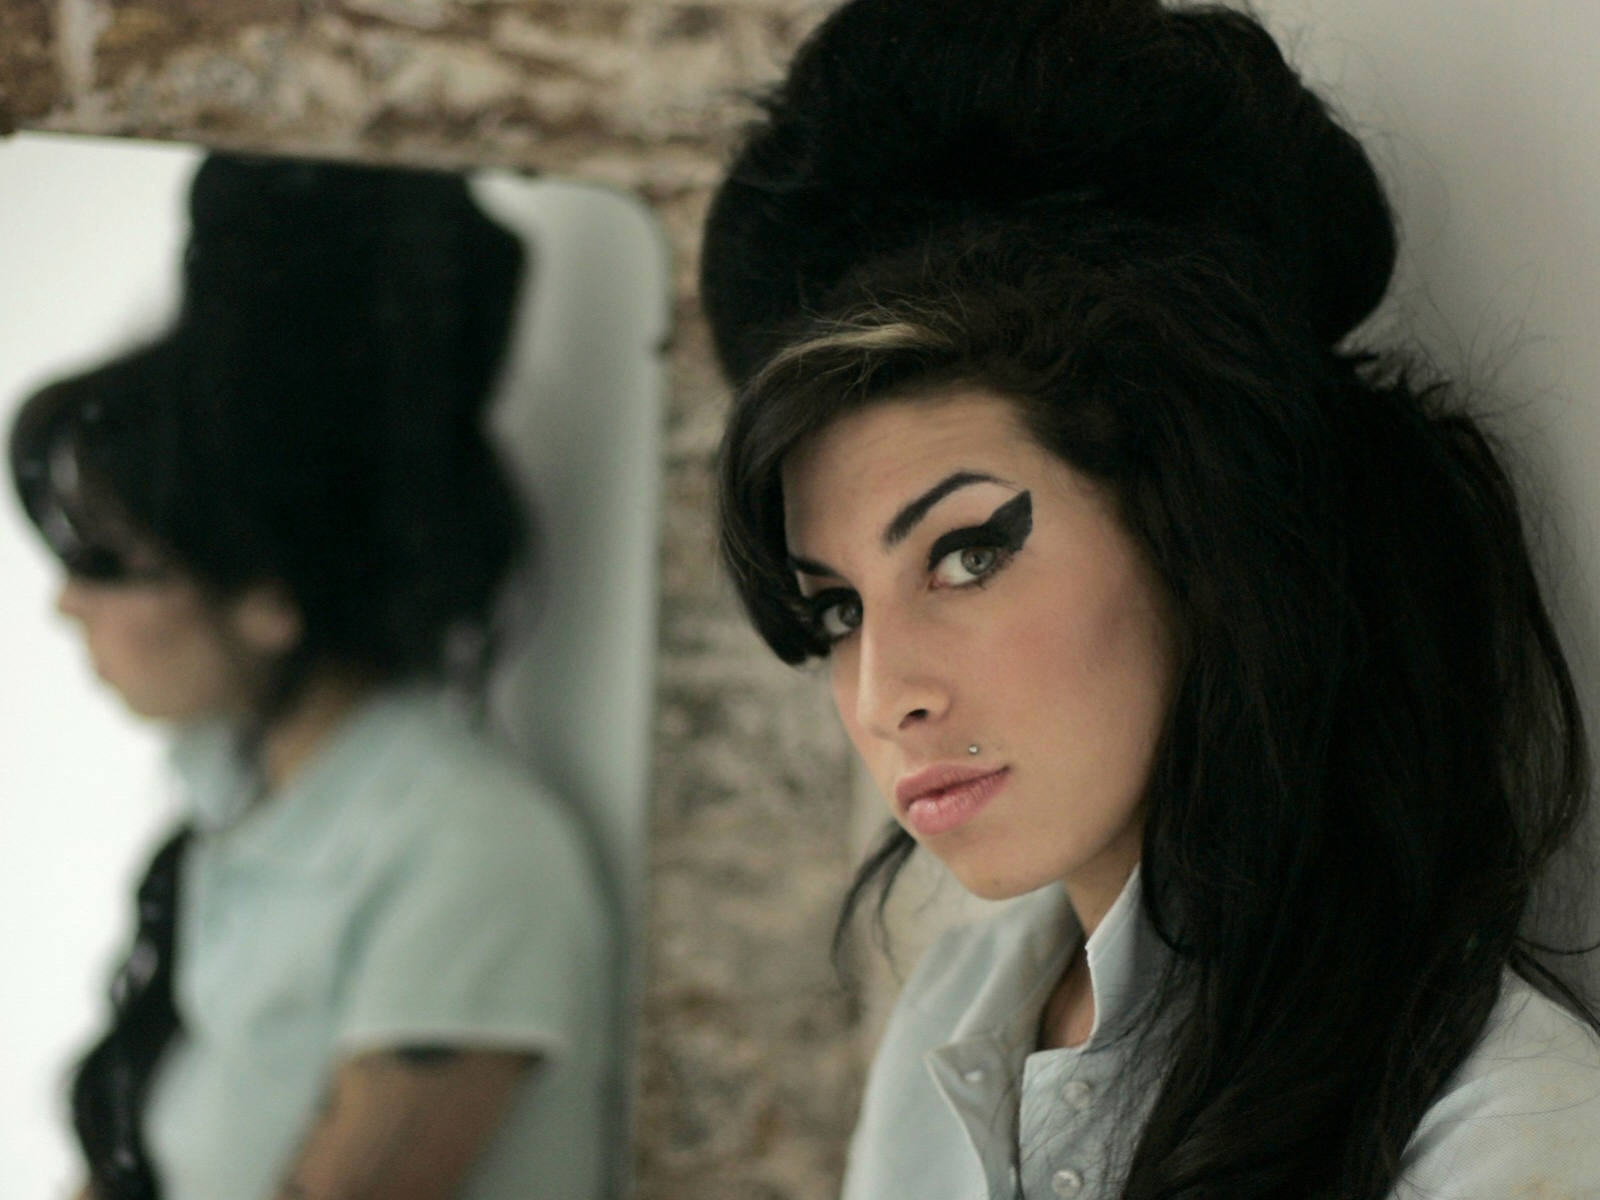 Fond d'ecran Amy Winehouse avant le concert